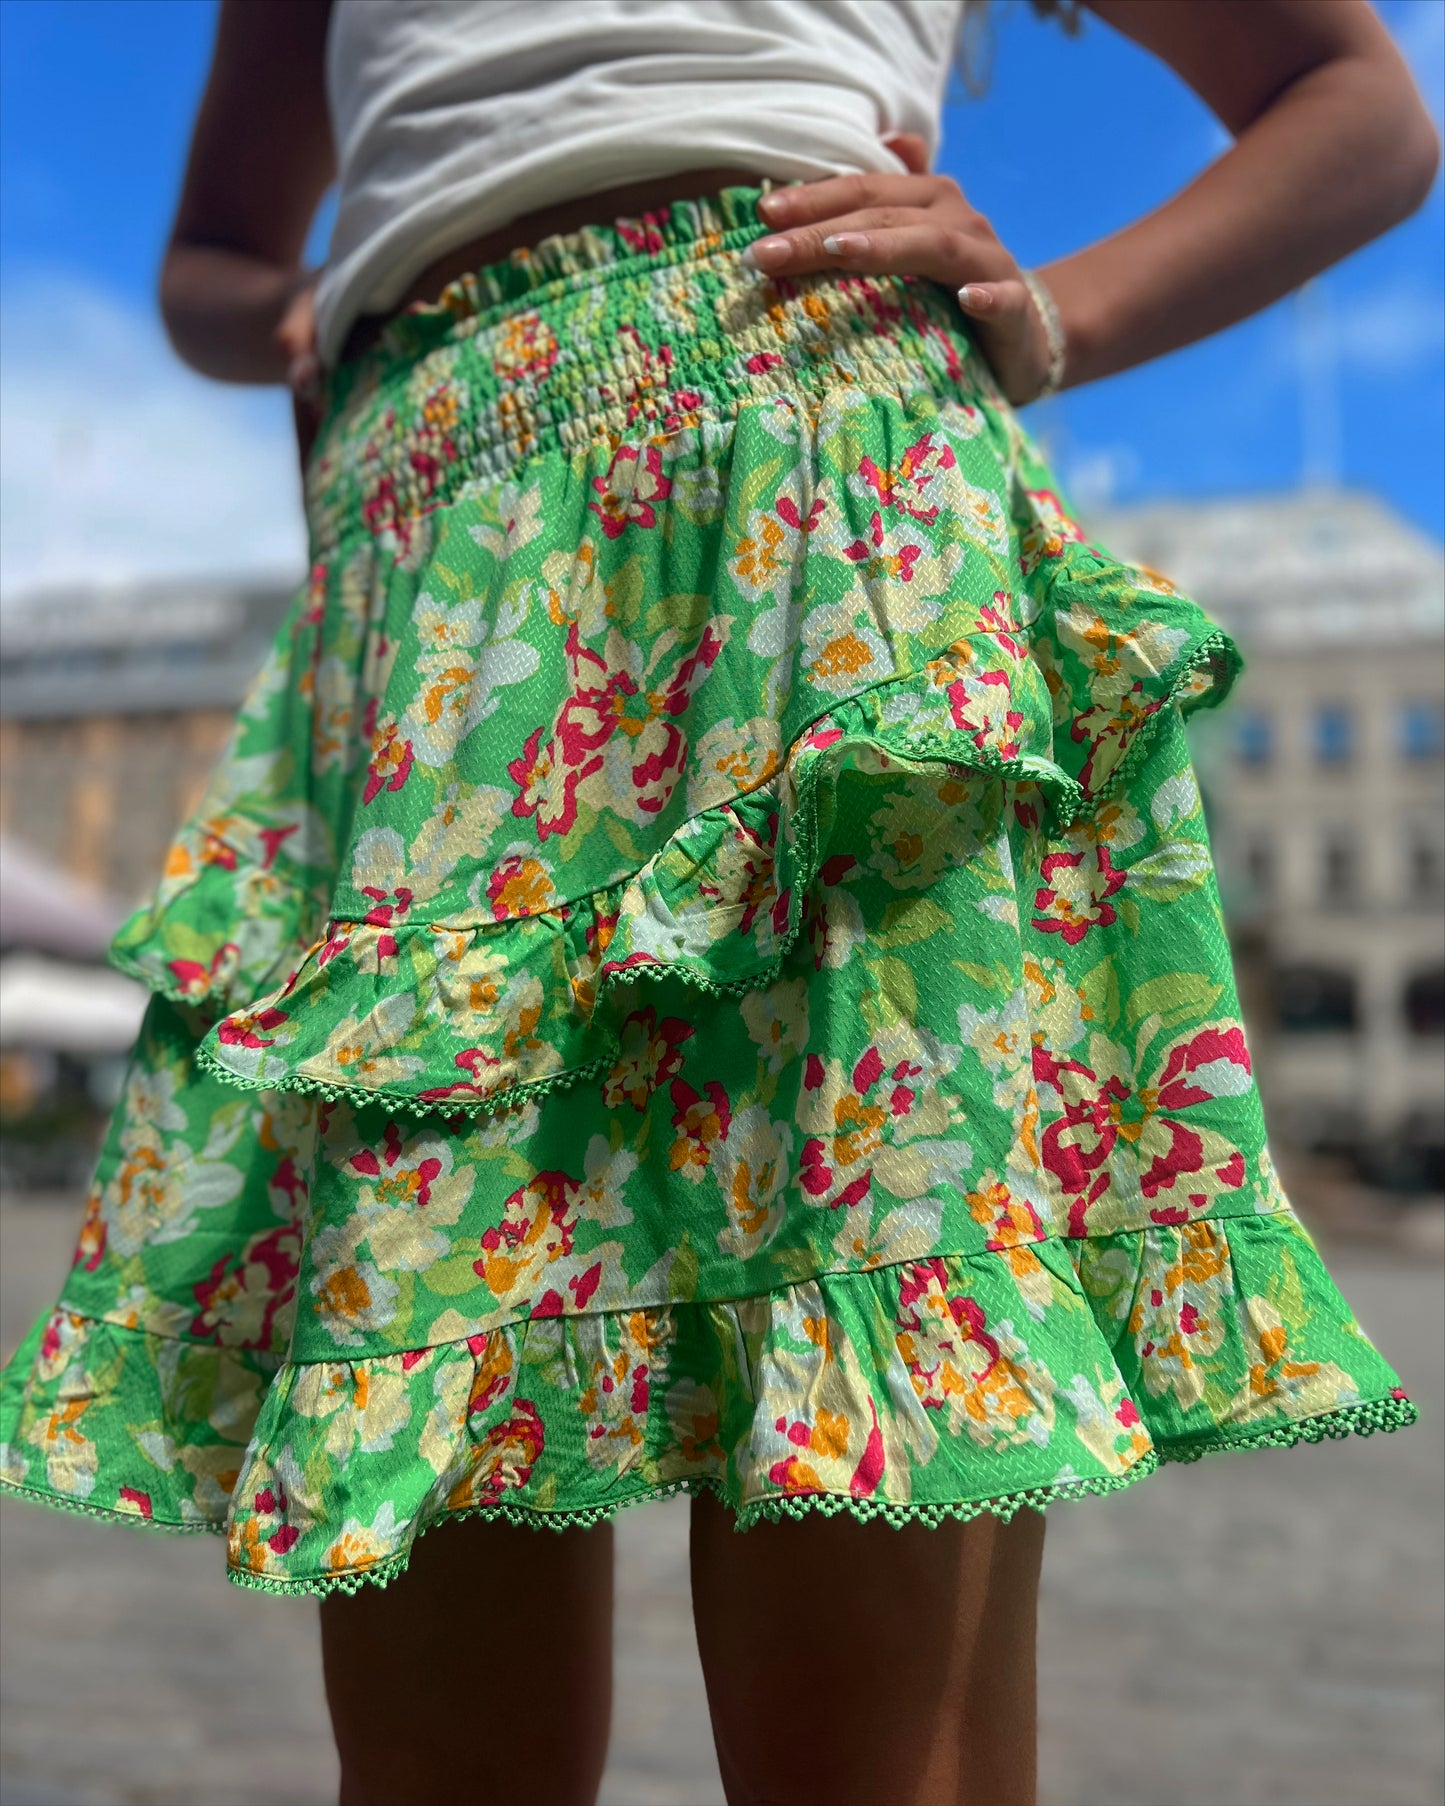 YASURIA Skirt - Poison Green